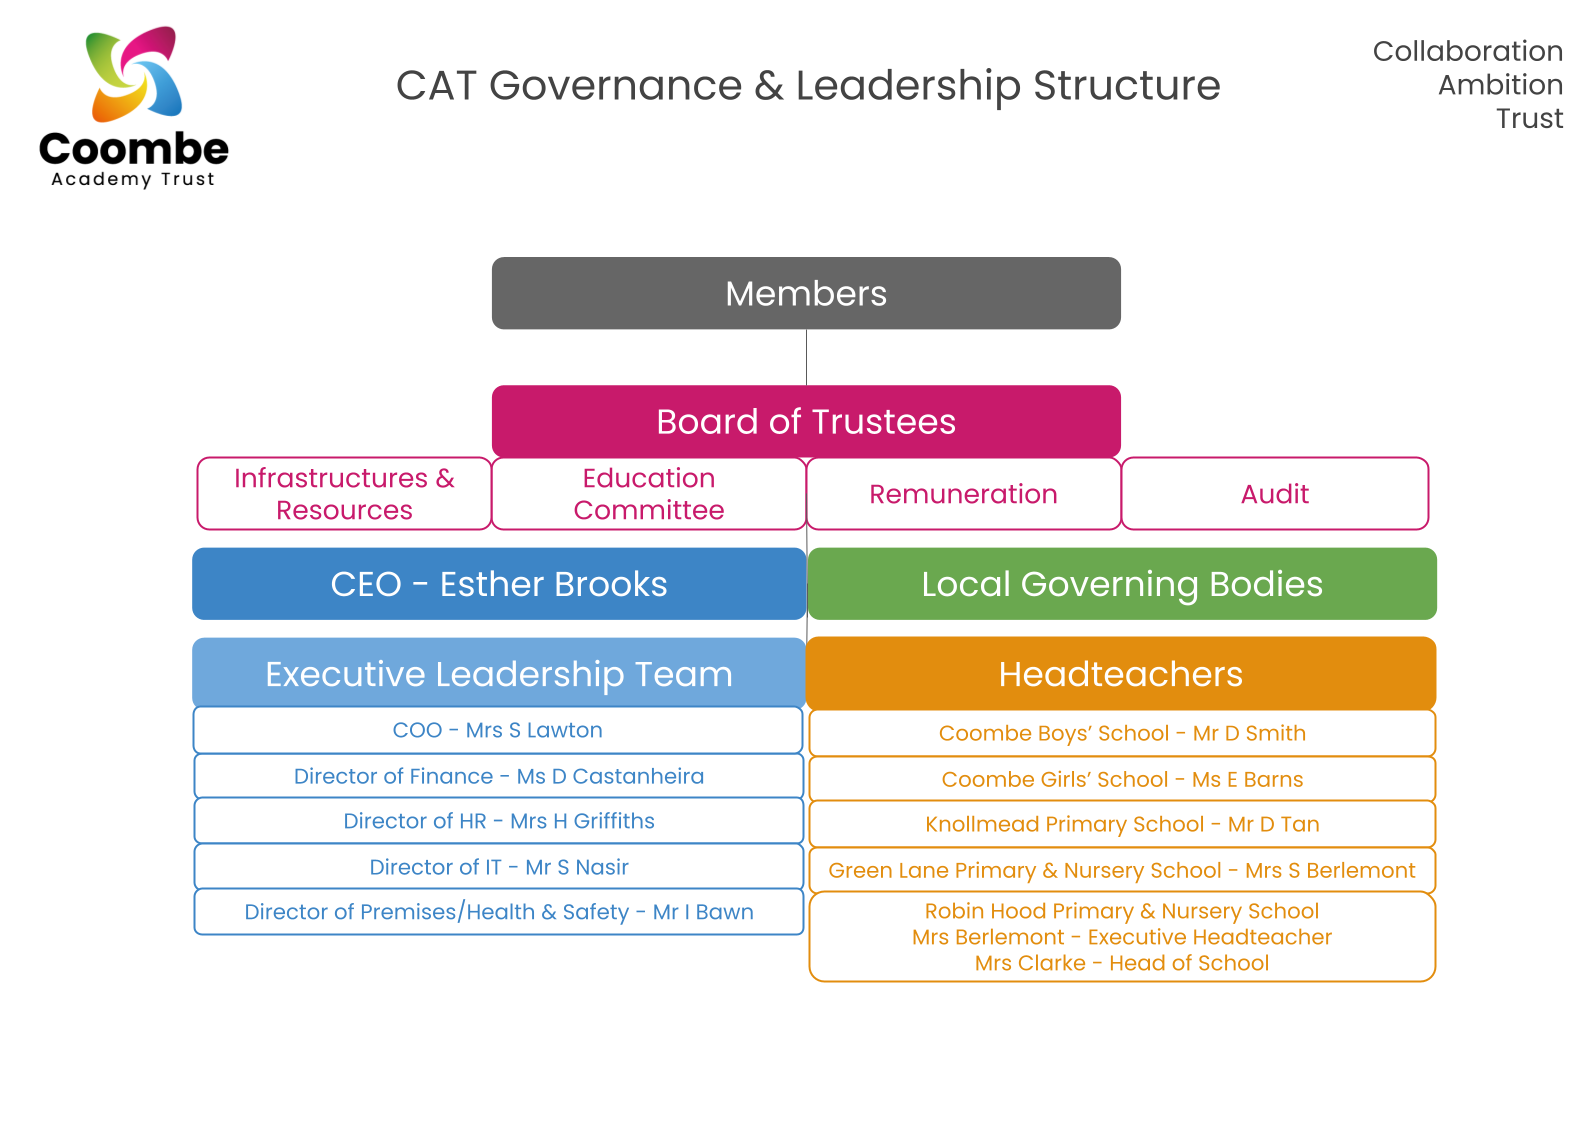 CAT Leadership Structure see details on link below